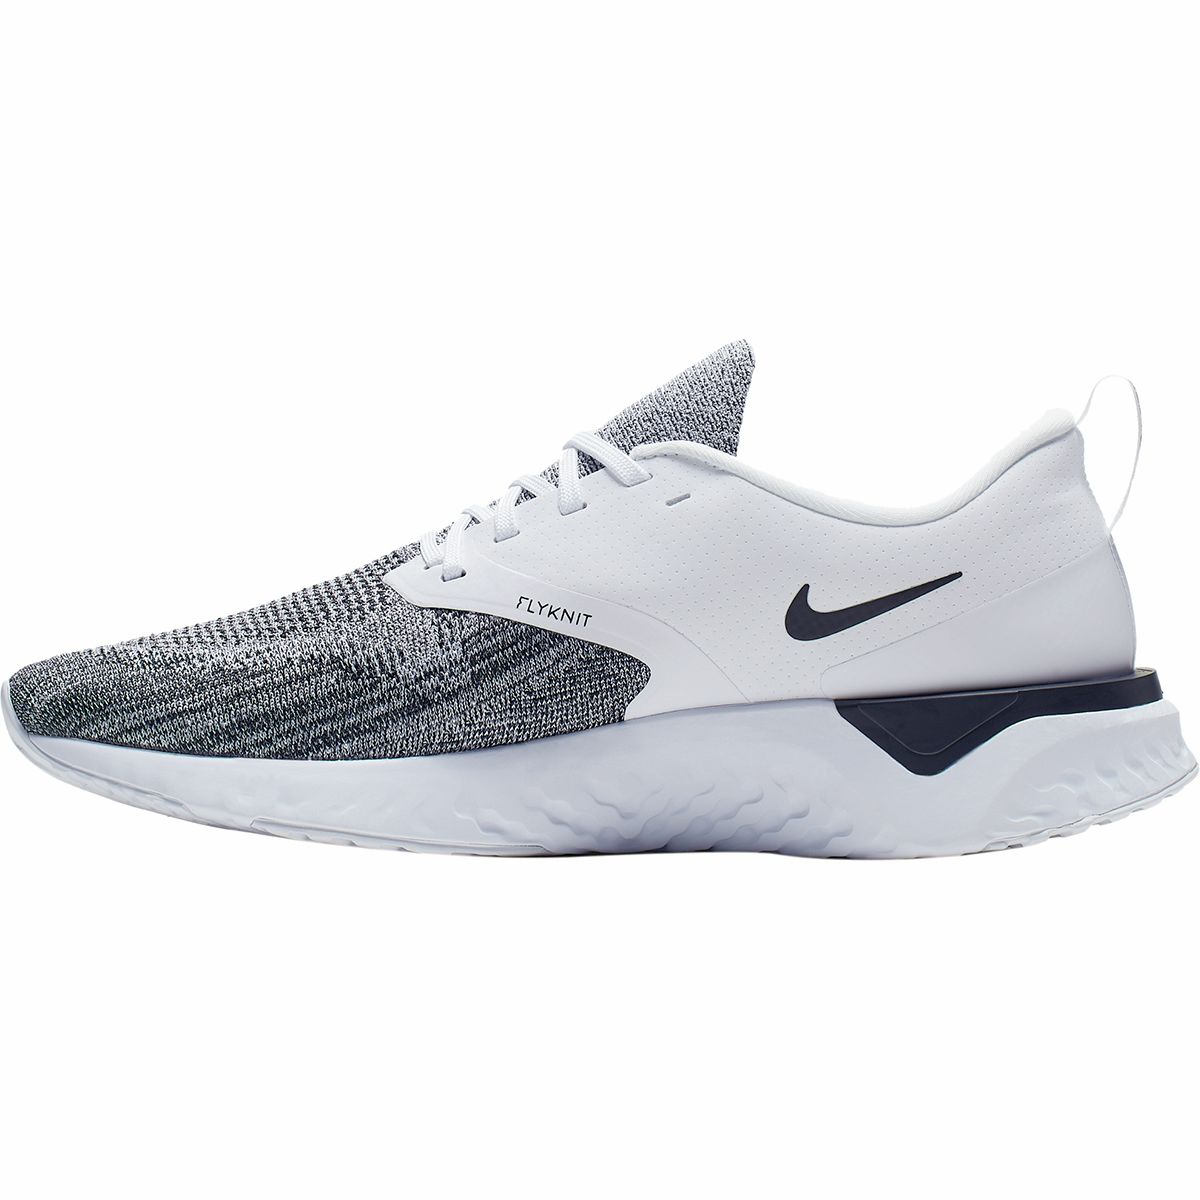 Nike Odyssey React Running Shoe - Men's - Footwear